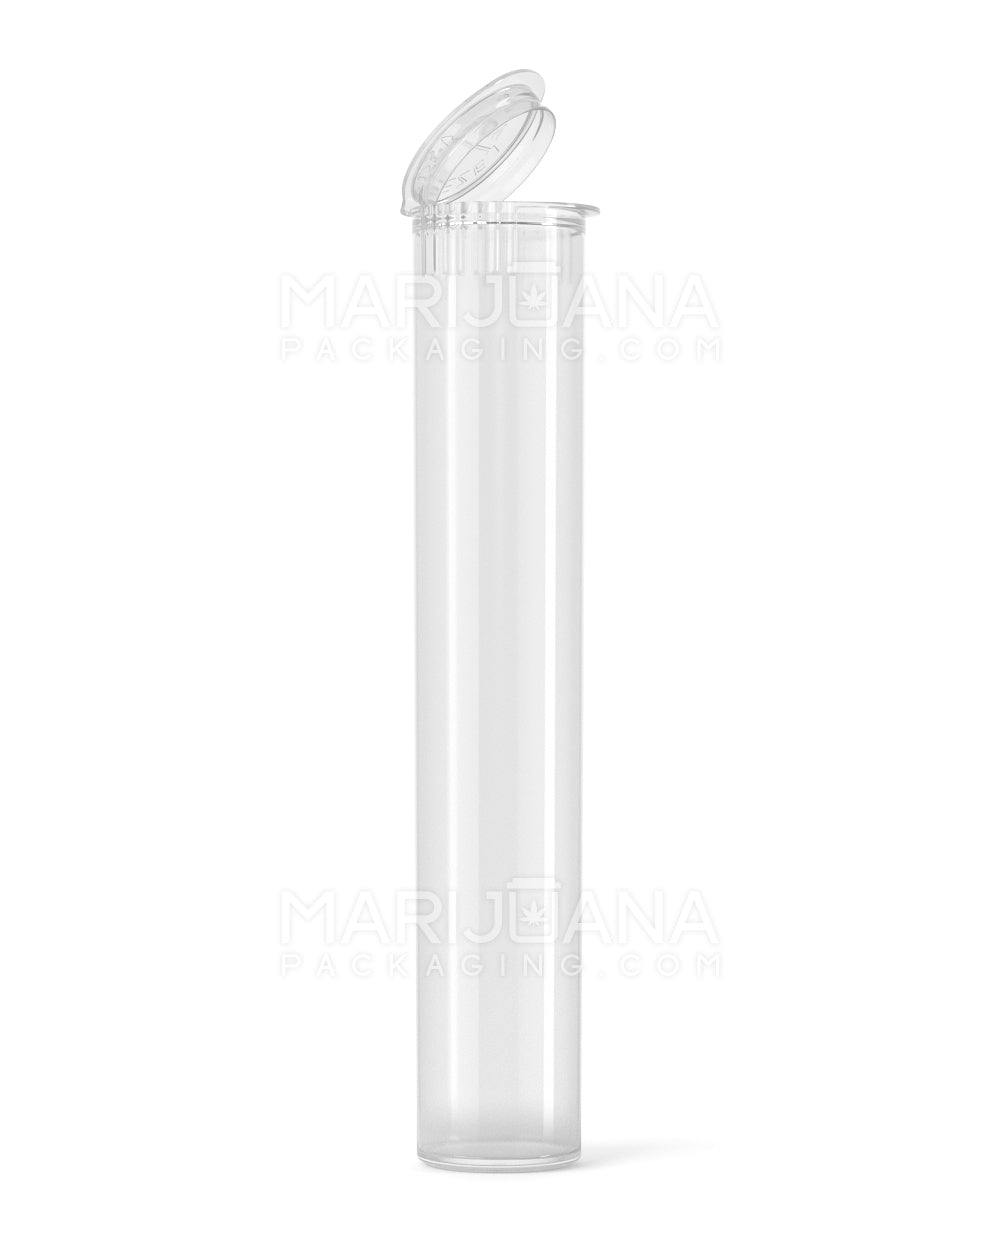 Child Resistant Pop Top Vape Cartridge Tube | 80mm - Clear | Sample - 1